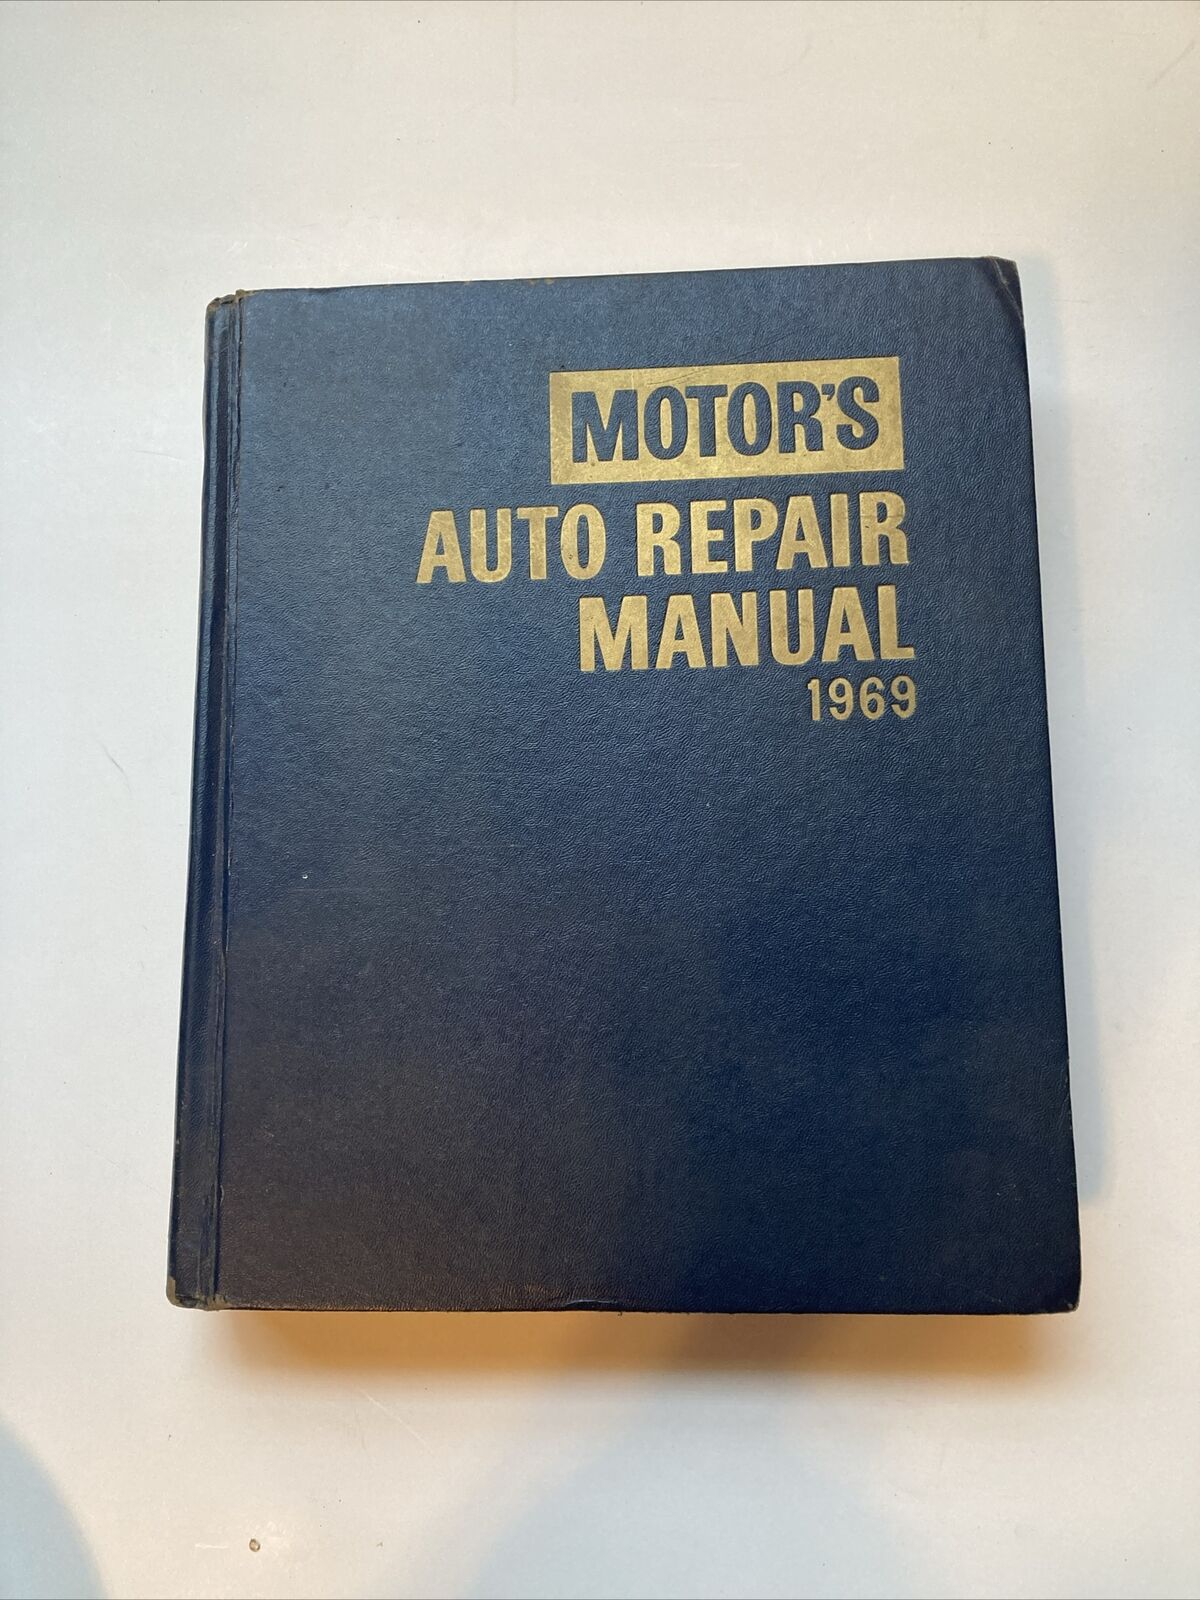 Vintage 1969 Motor's Auto Repair Manual, Illustrated, Hardcover